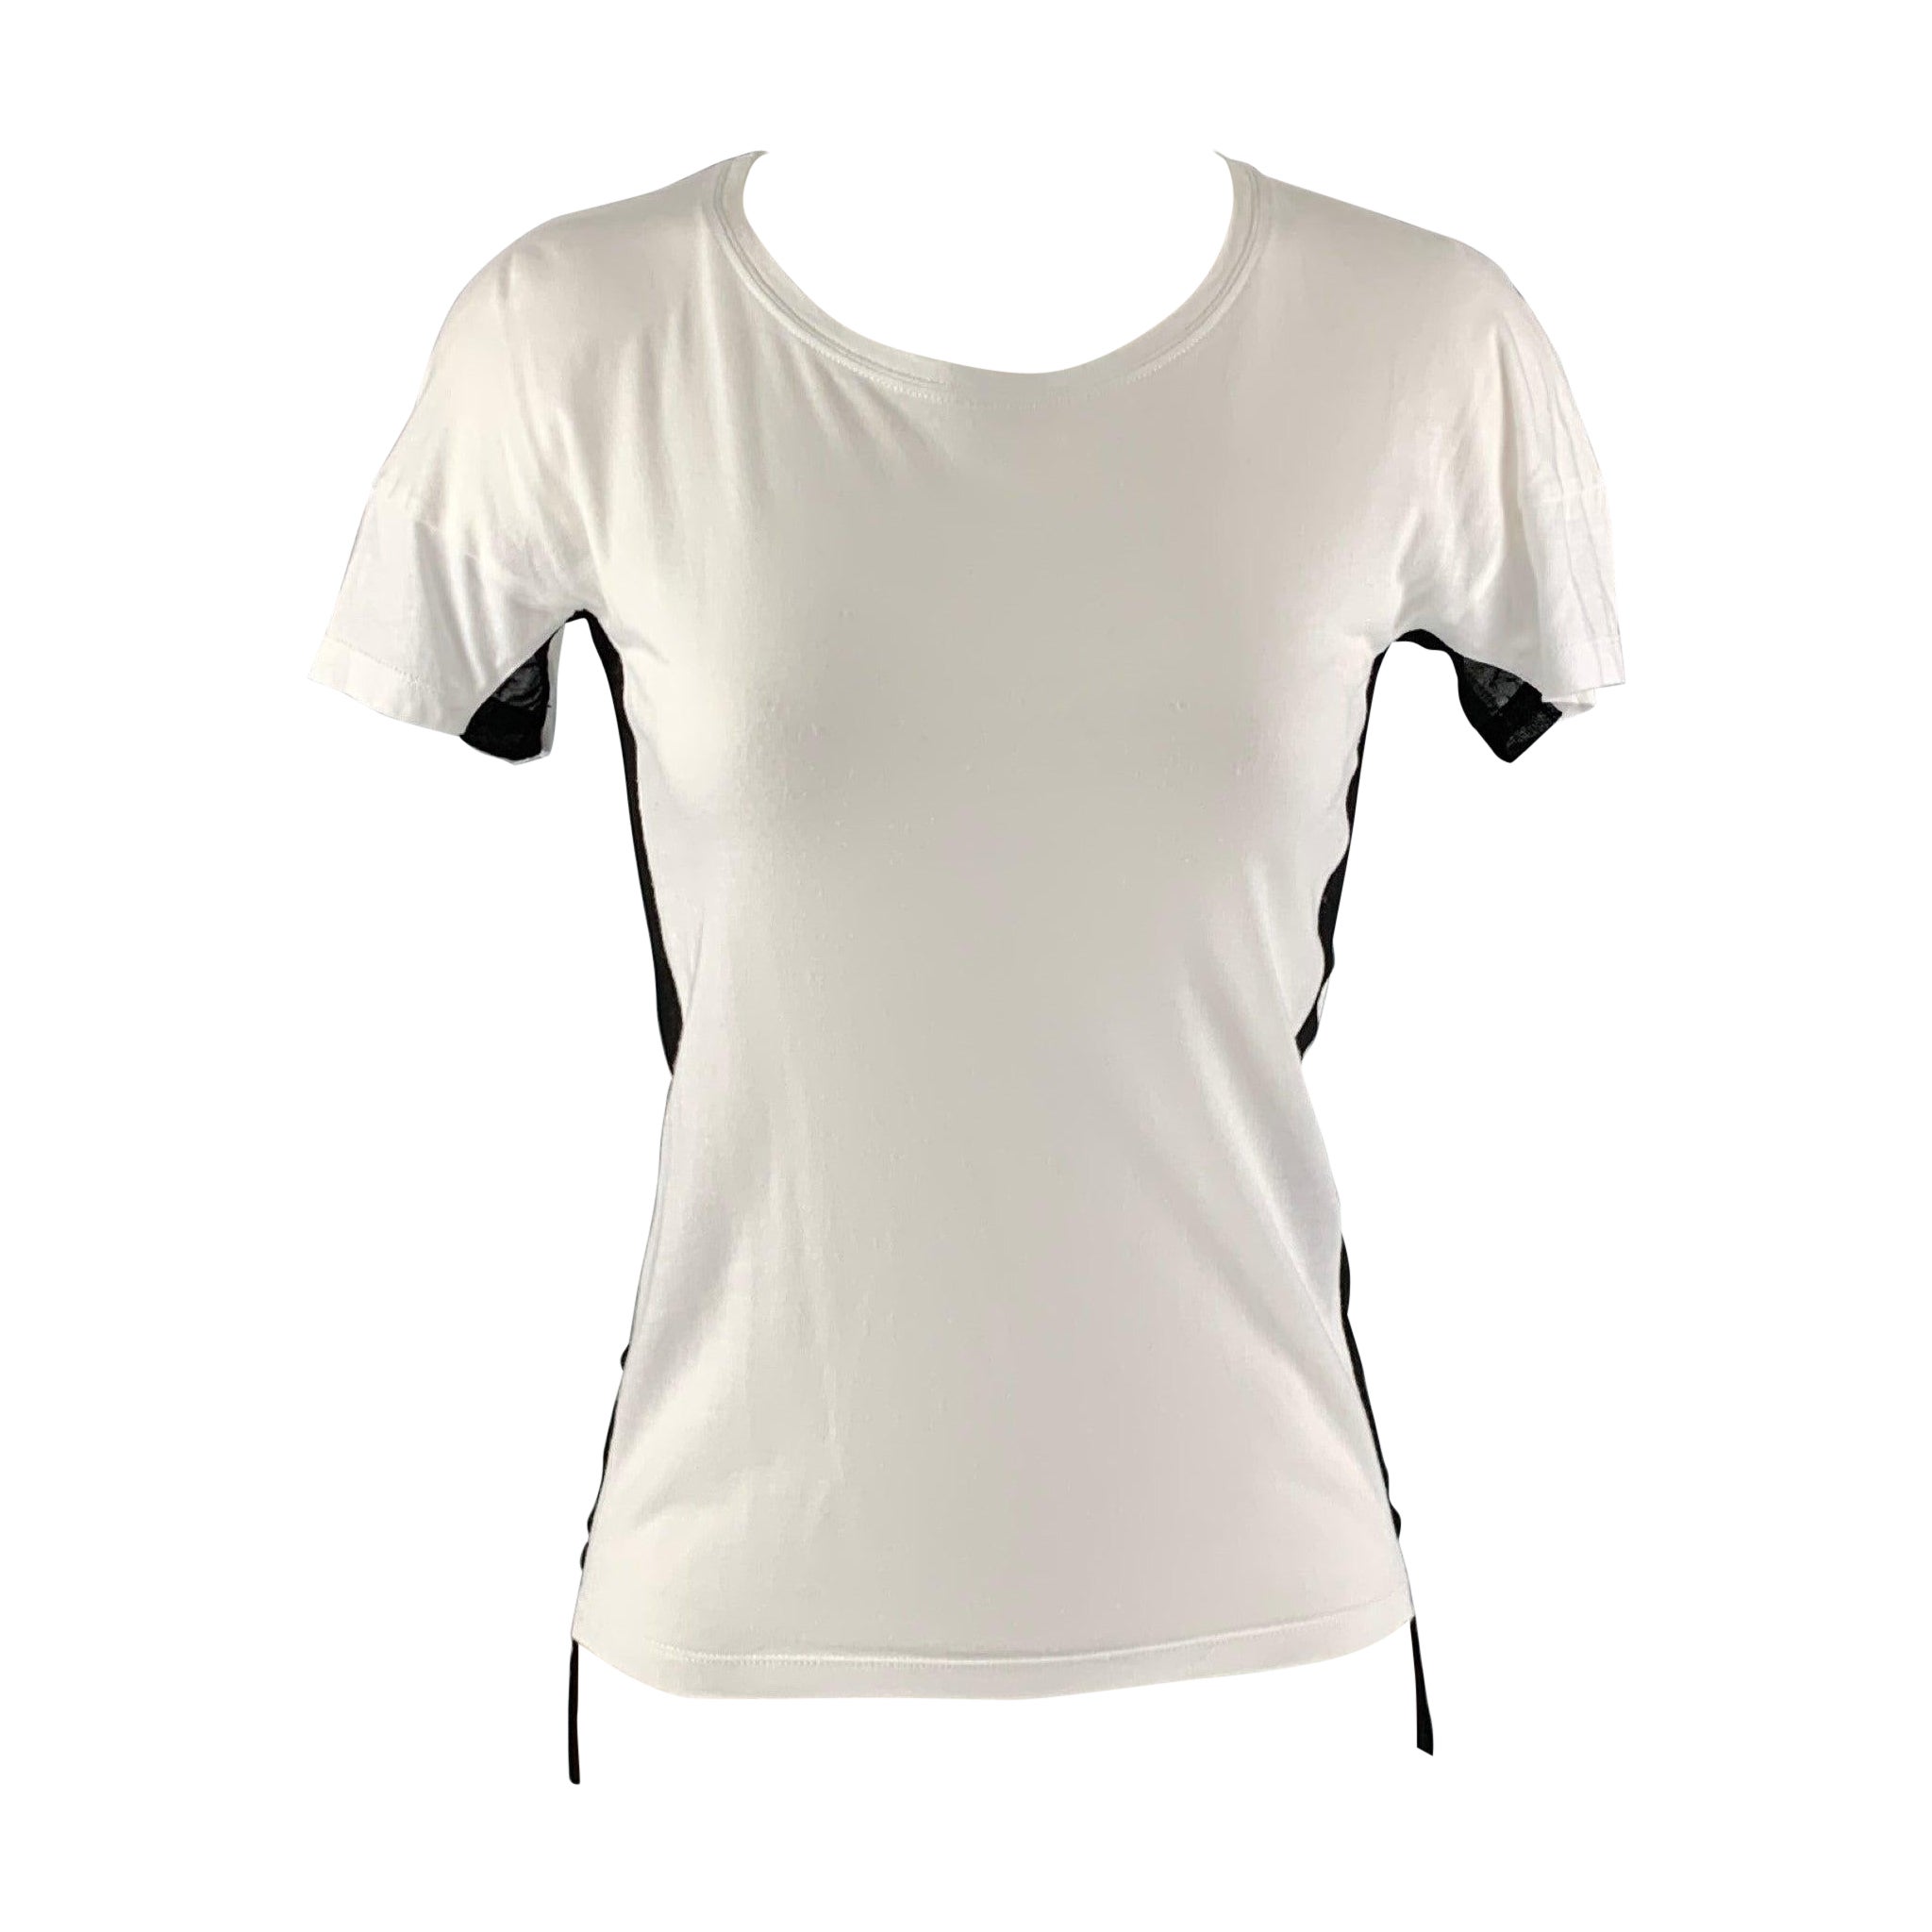 SONIA RYKIEL - T-shirt blanc et noir, taille S en vente